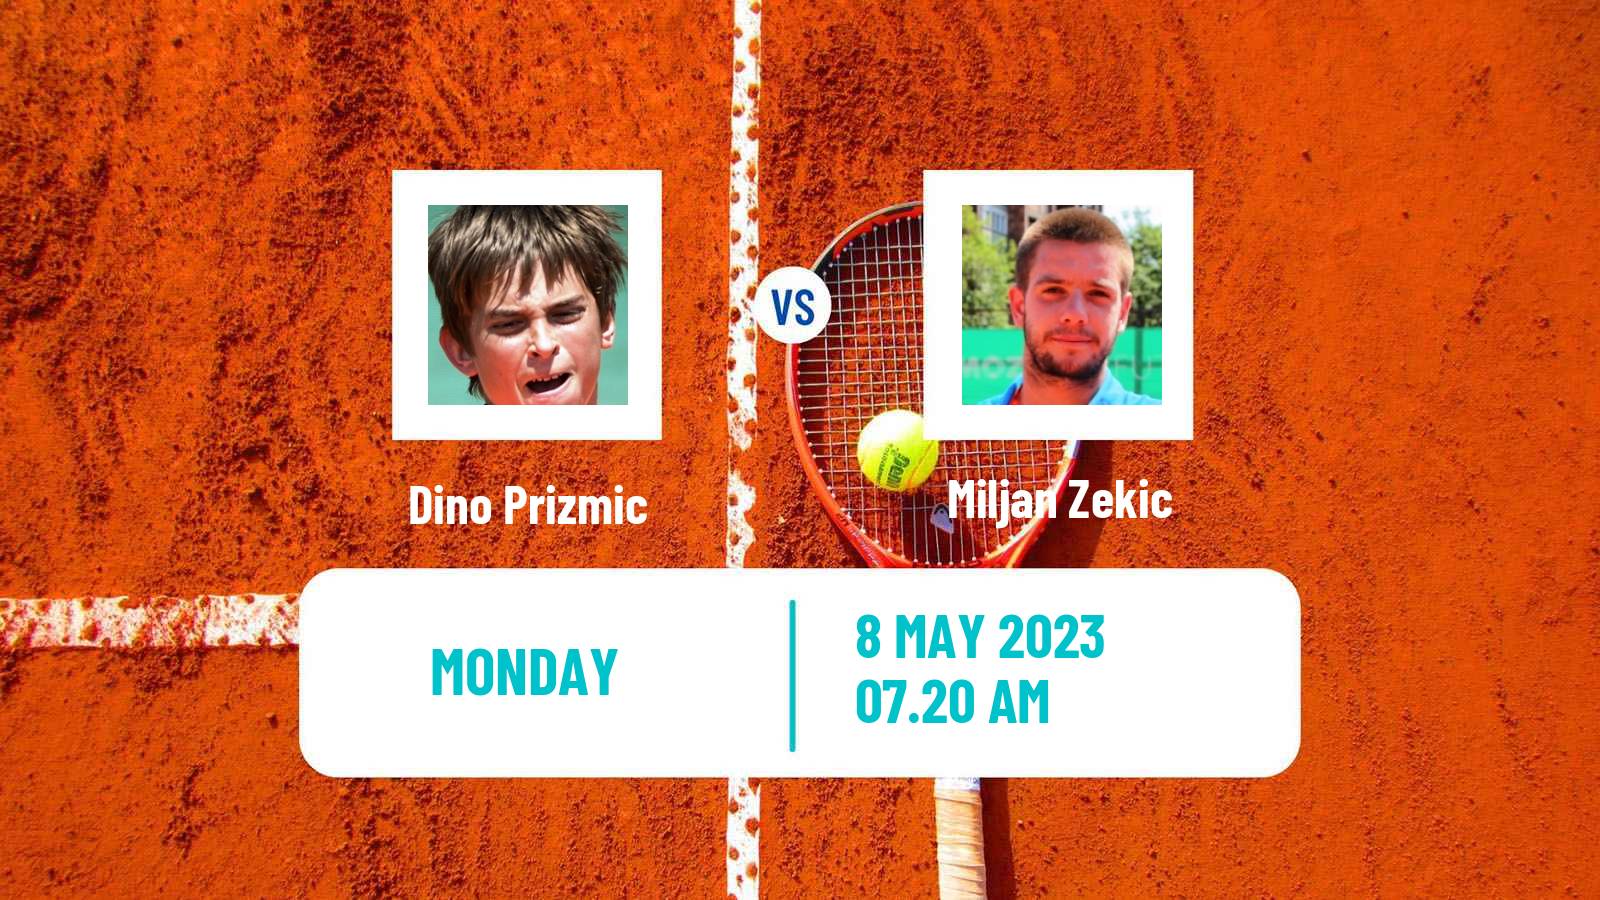 Tennis ATP Challenger Dino Prizmic - Miljan Zekic